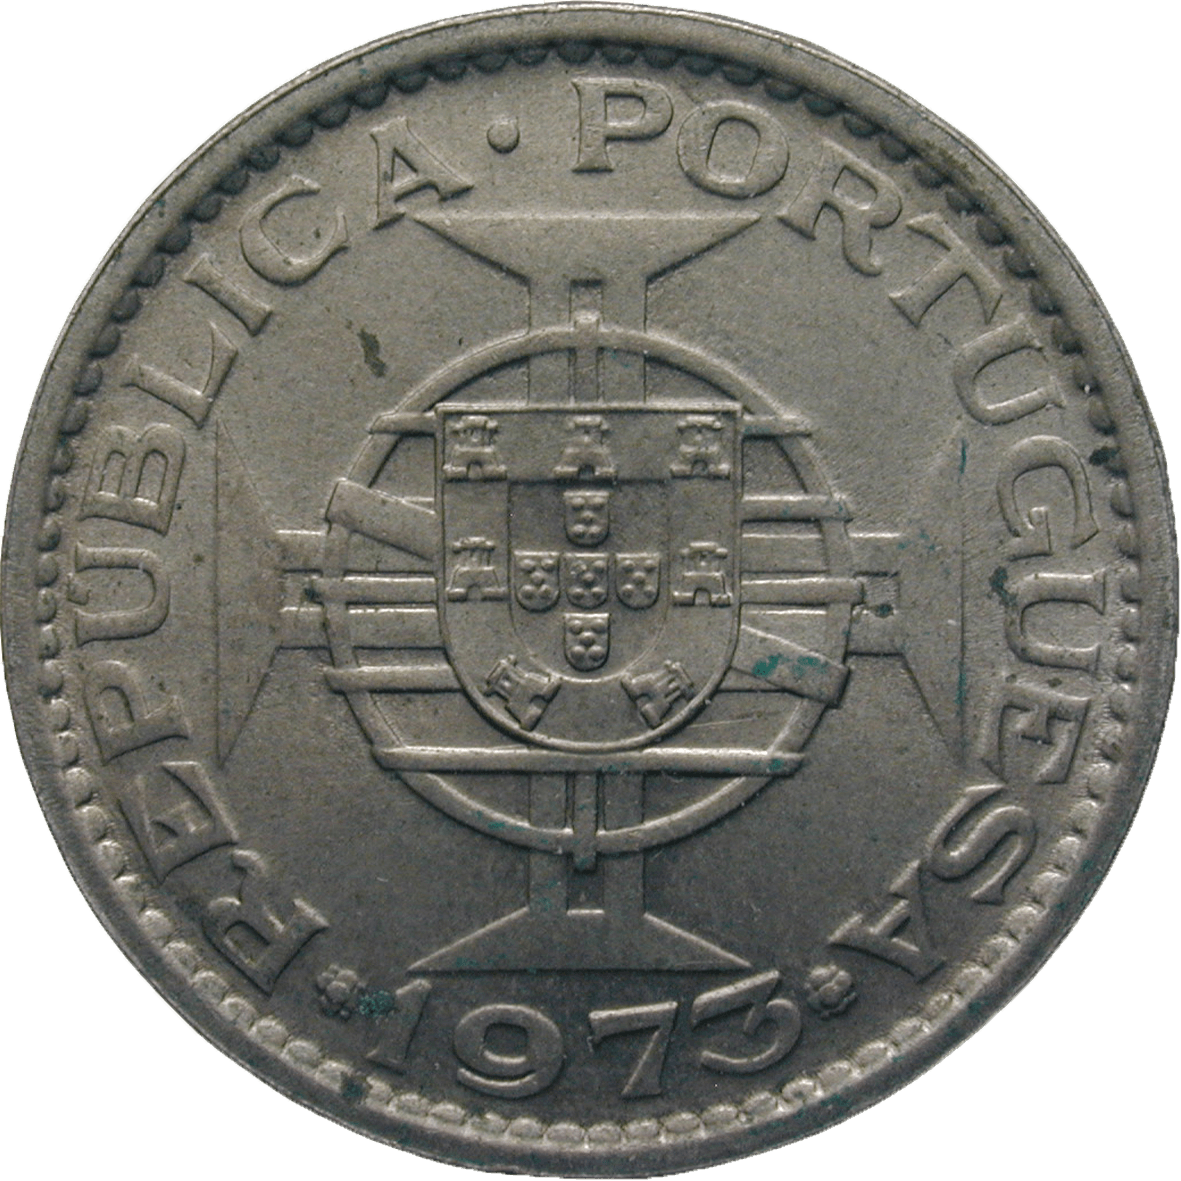 Republik Portugal für Portugiesisch-Guinea, 5 Escudos 1973 (obverse)